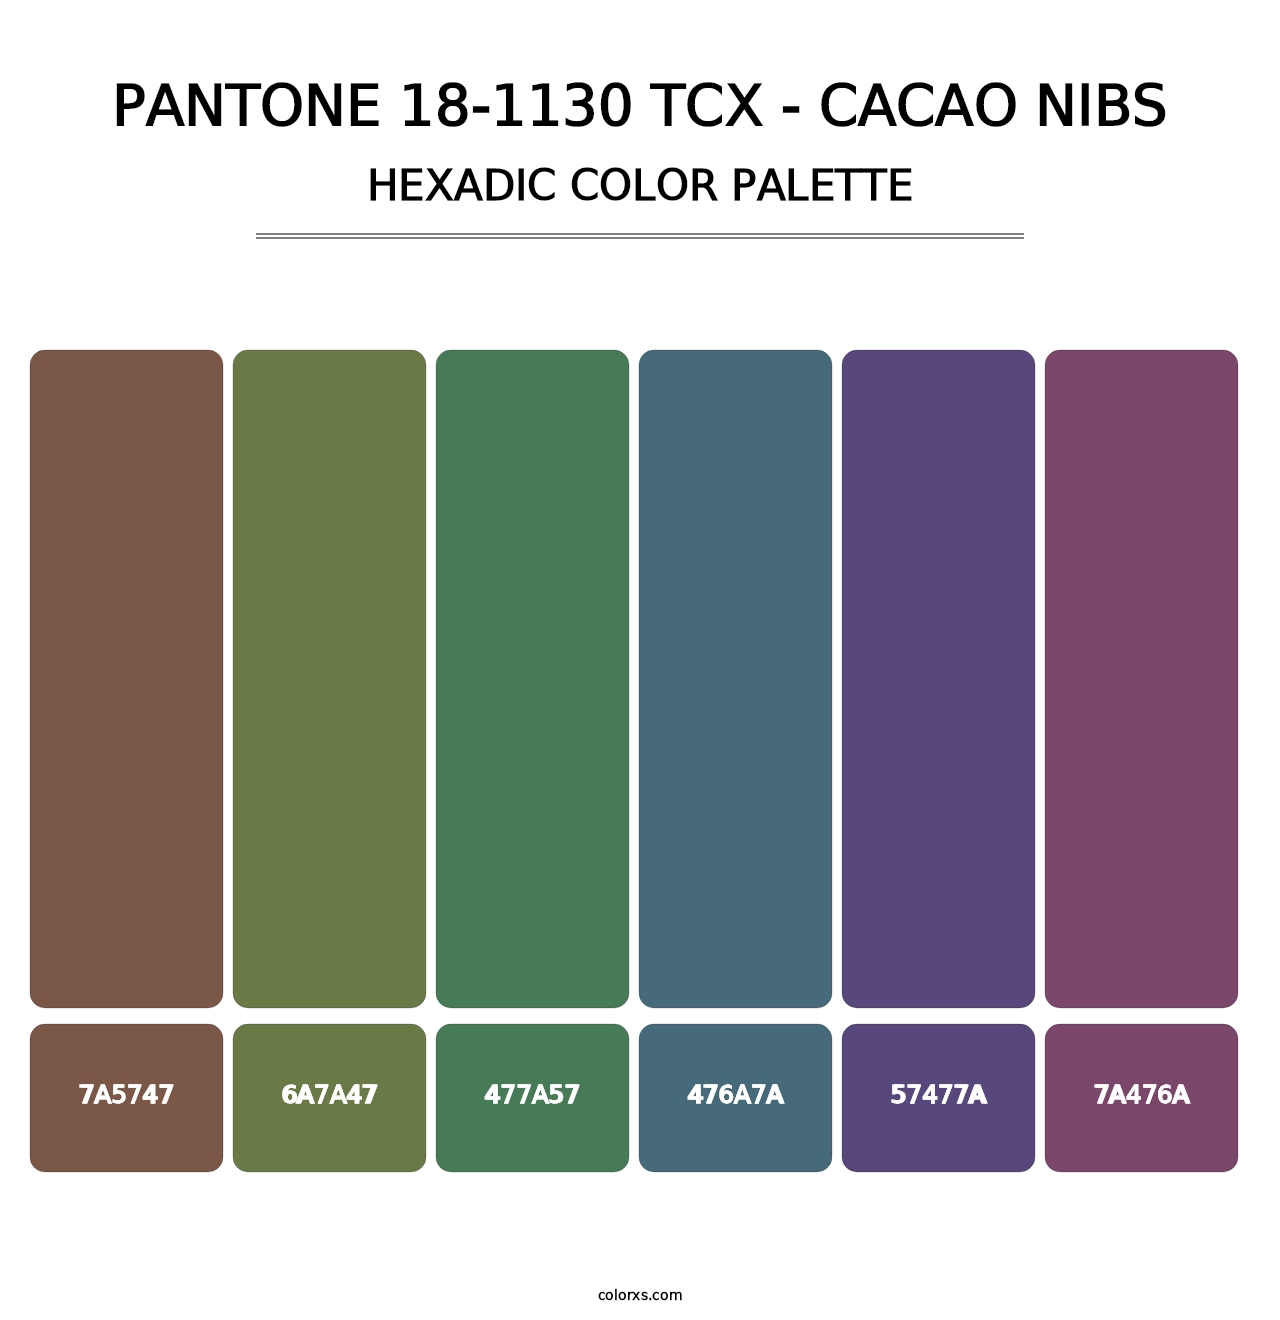 PANTONE 18-1130 TCX - Cacao Nibs - Hexadic Color Palette